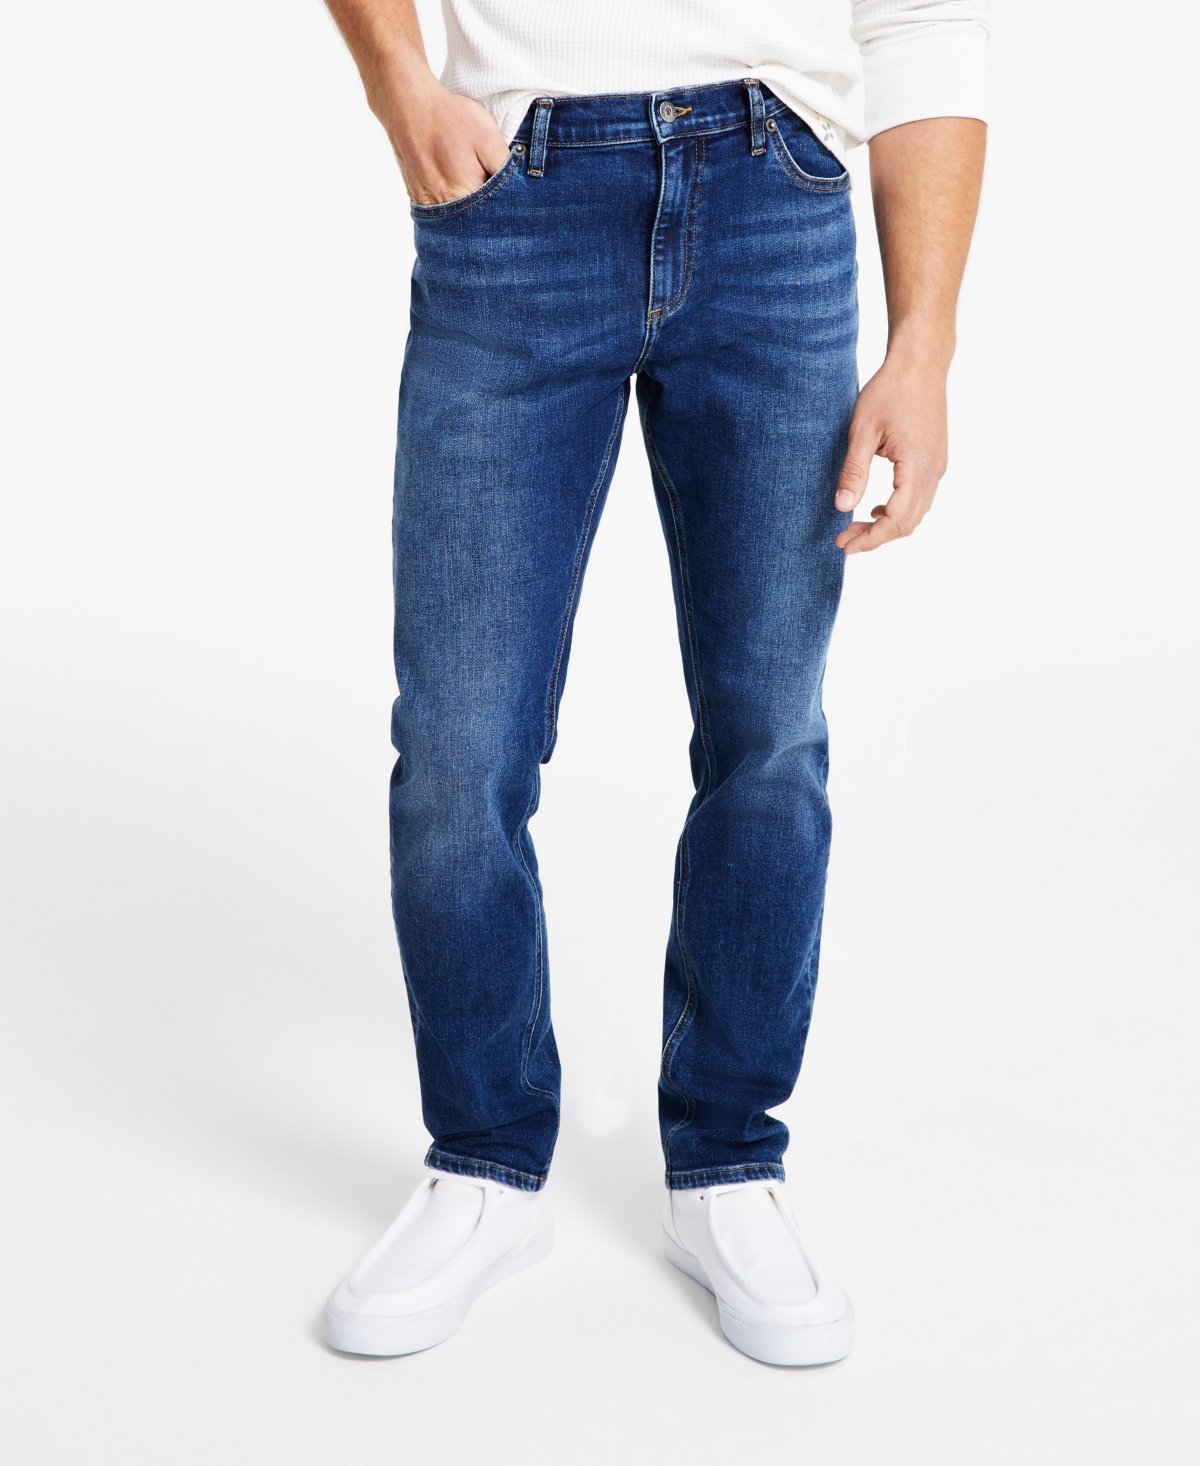 Men's Denver Slim-Fit Jeans, Created for Macy's - Rainier Dark Wash